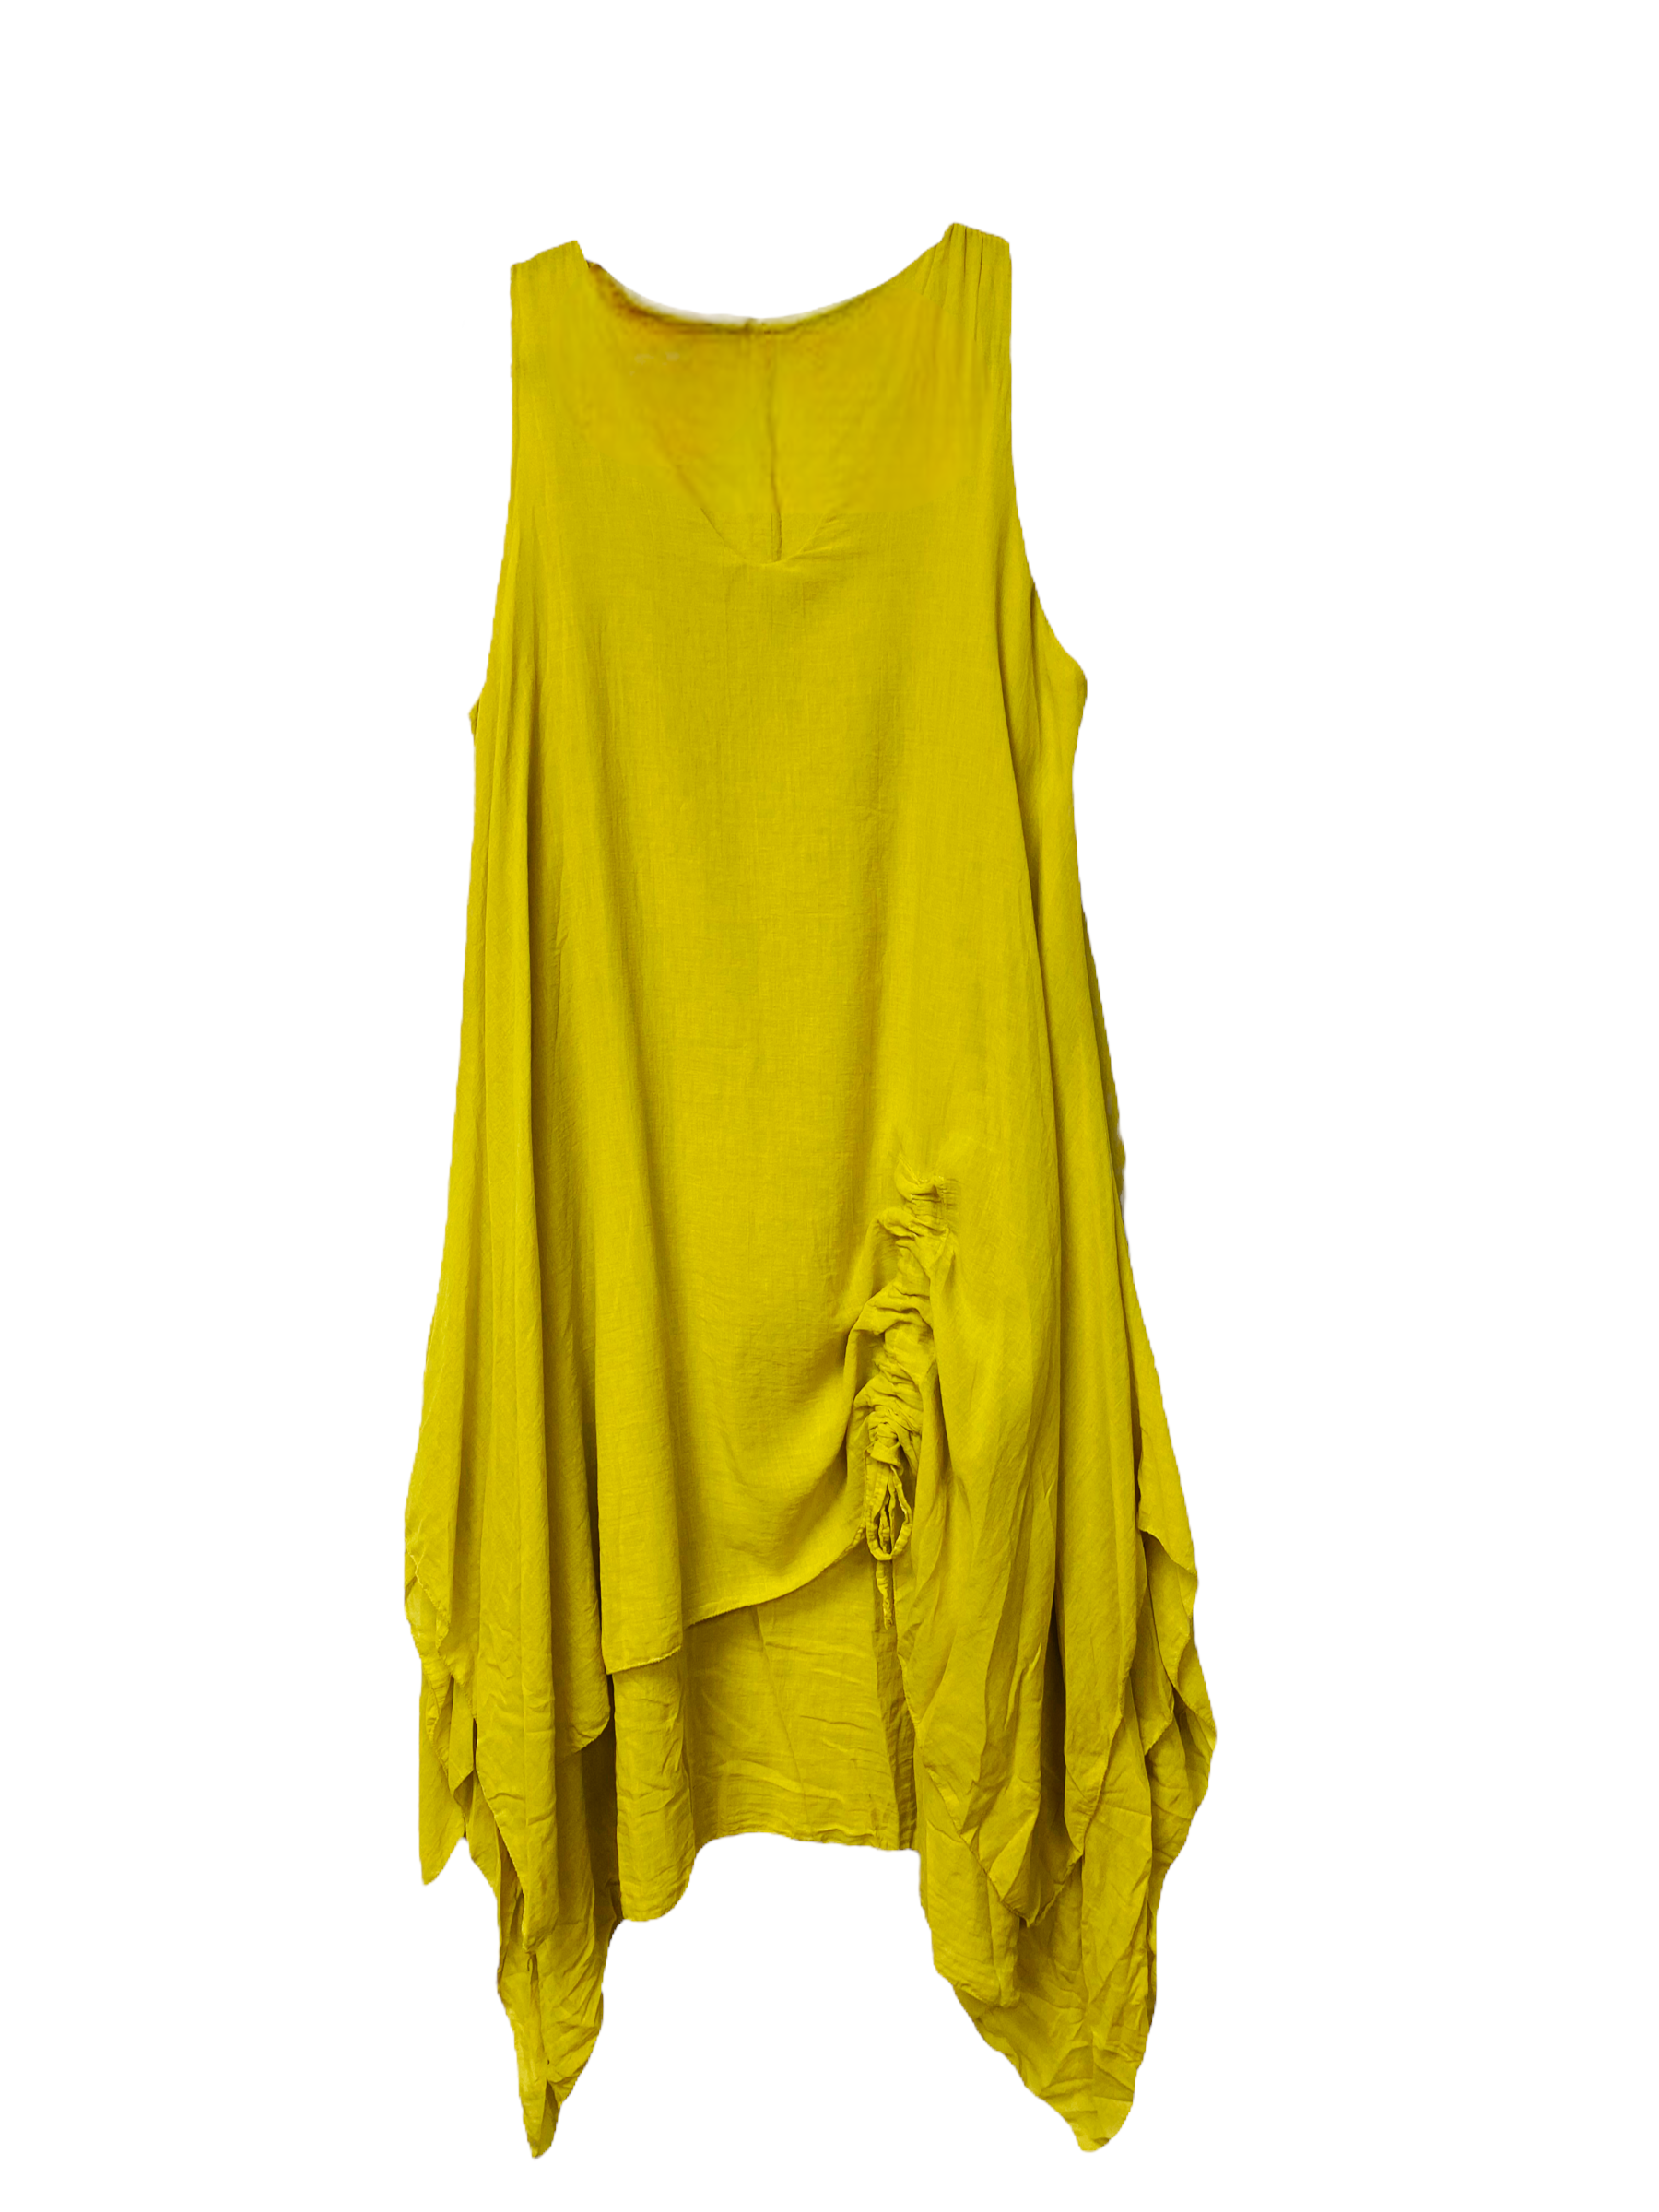 Meo Meli, Made in Italy, cotton dress, 8069, Italian Summer dress ...